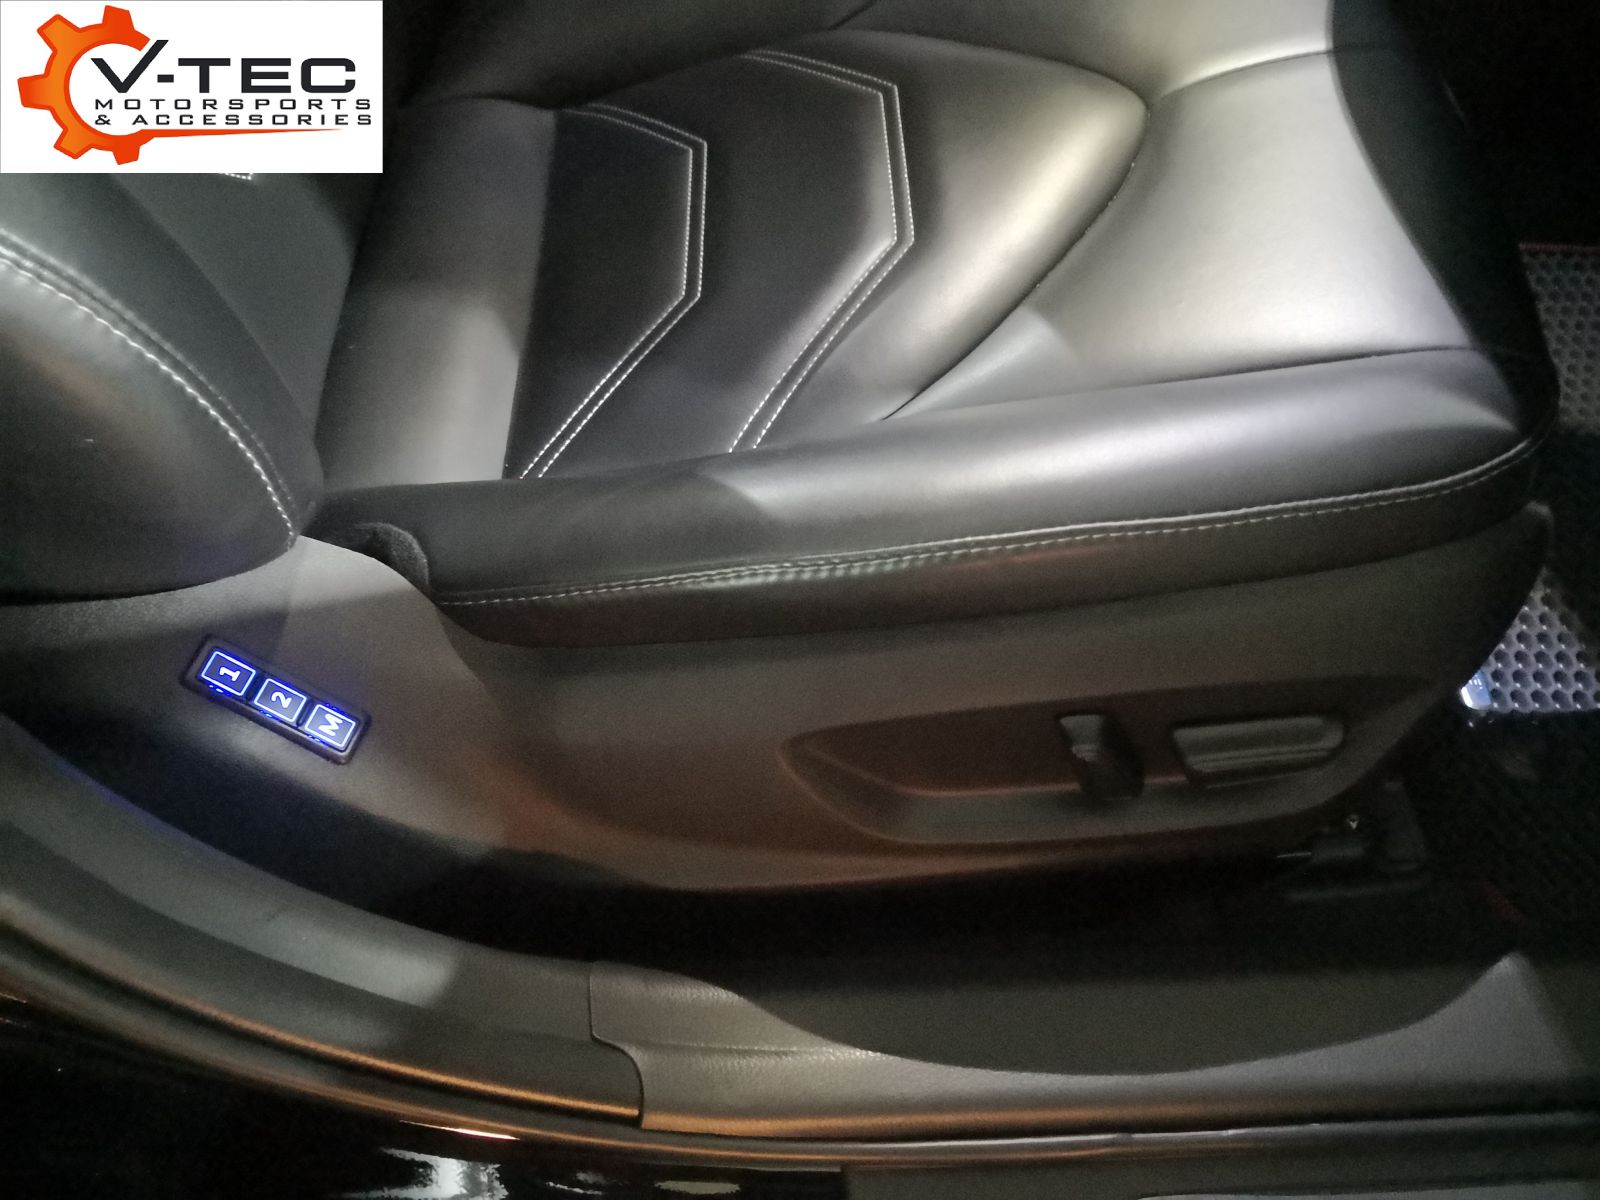 Manual to Electric Seat Conversion Retrofit Modification